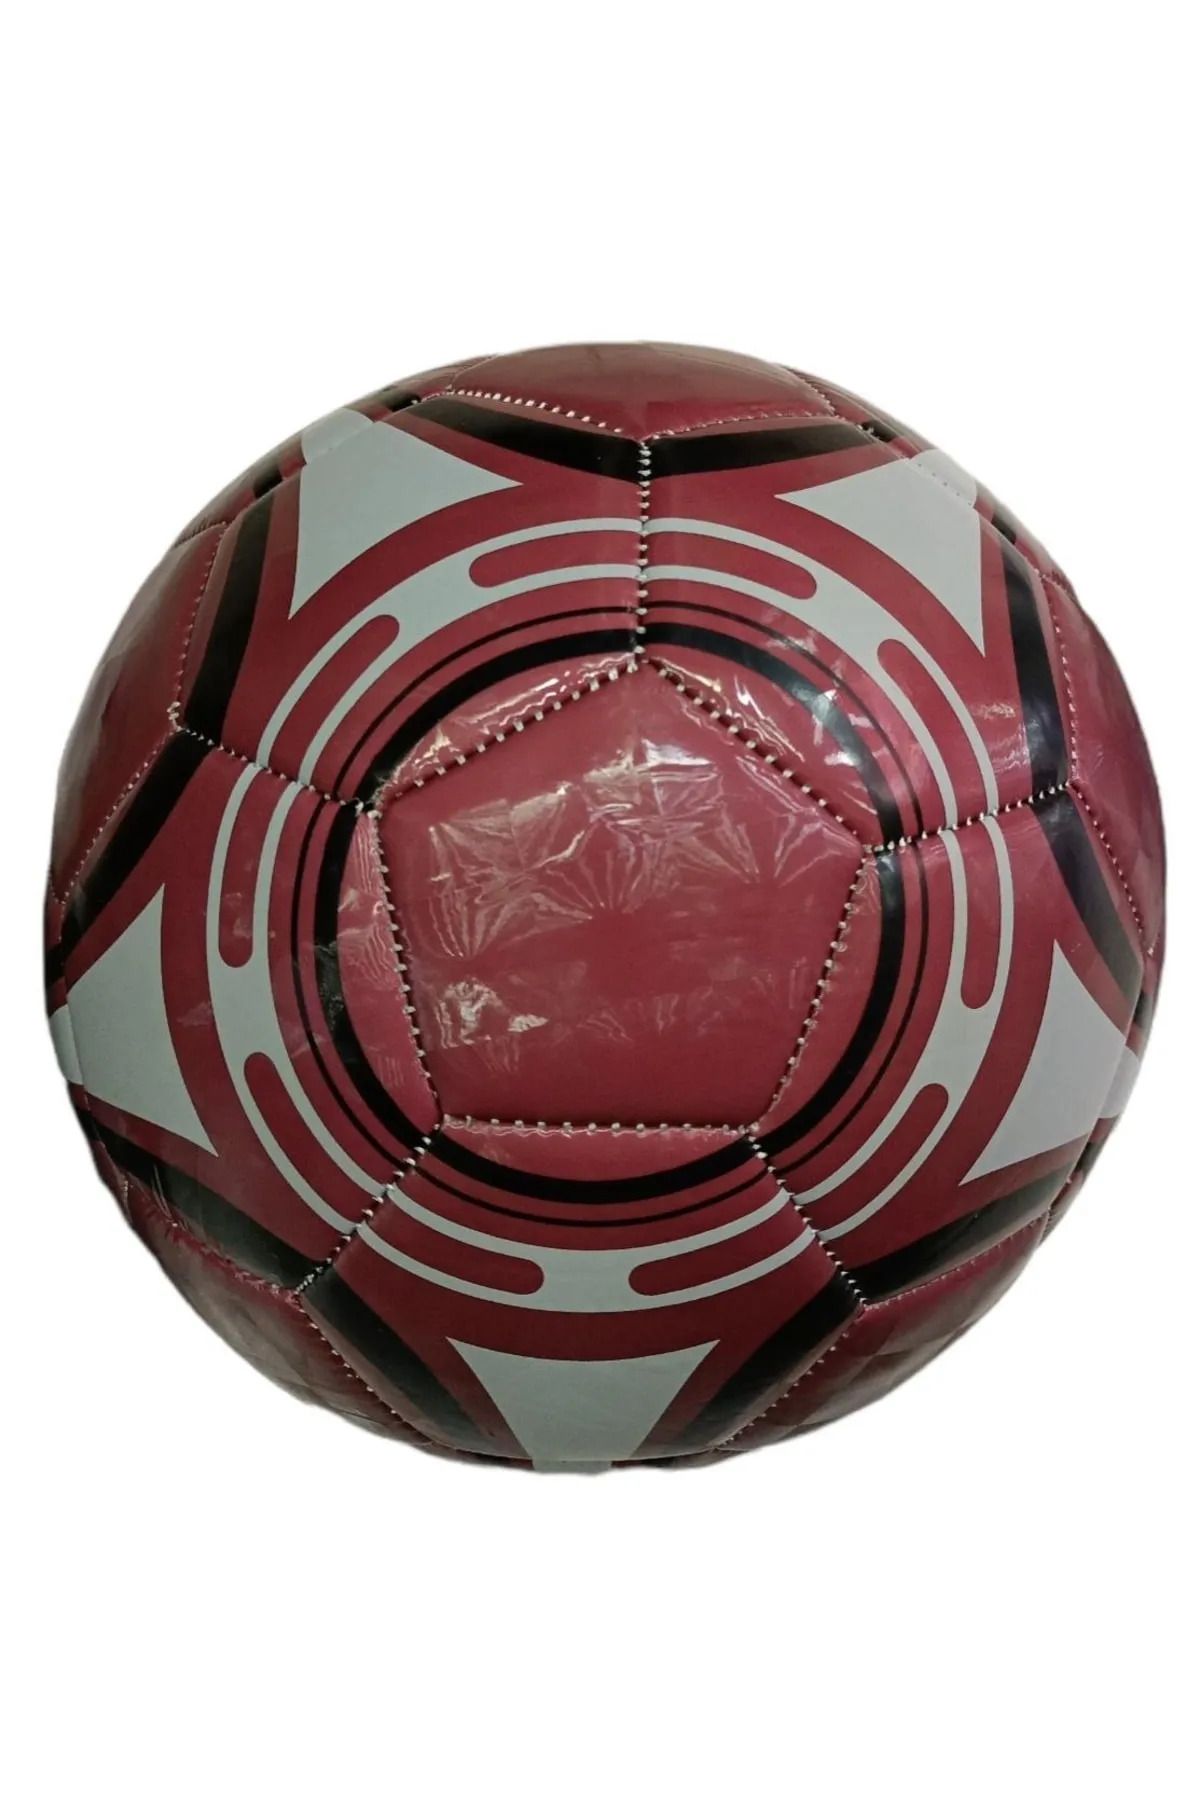 TOCSPORTS Çocuklar İçin Bordo Futbol Oyun Topu - No 5 - 3 Astar - 325 Gram - Pompa Dahil